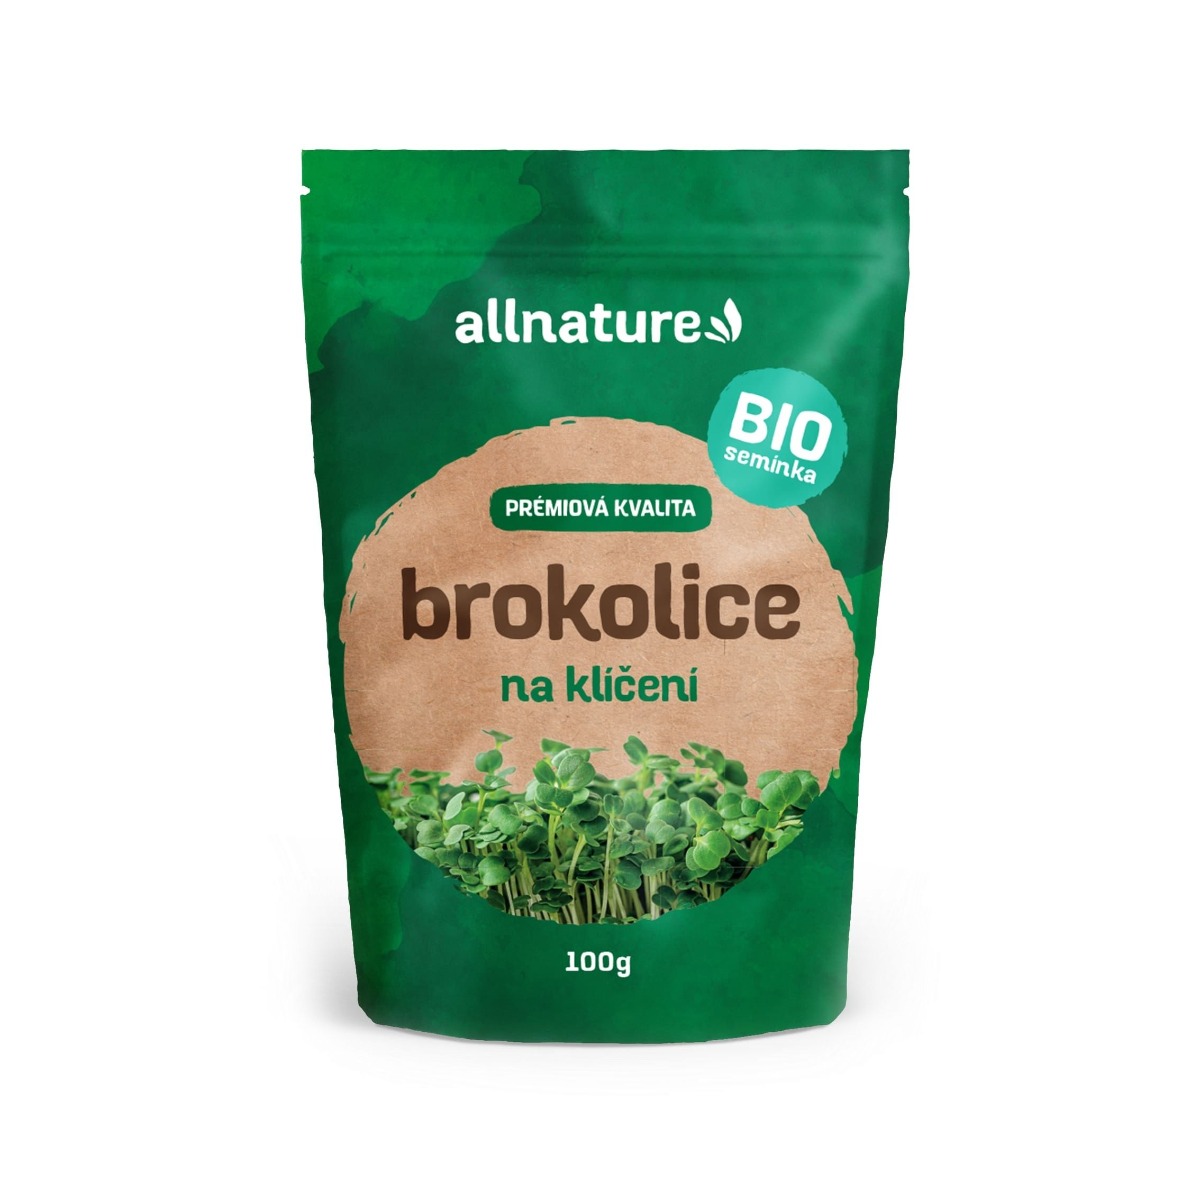 Allnature Semínka na klíčení brokolice BIO 100 g Allnature